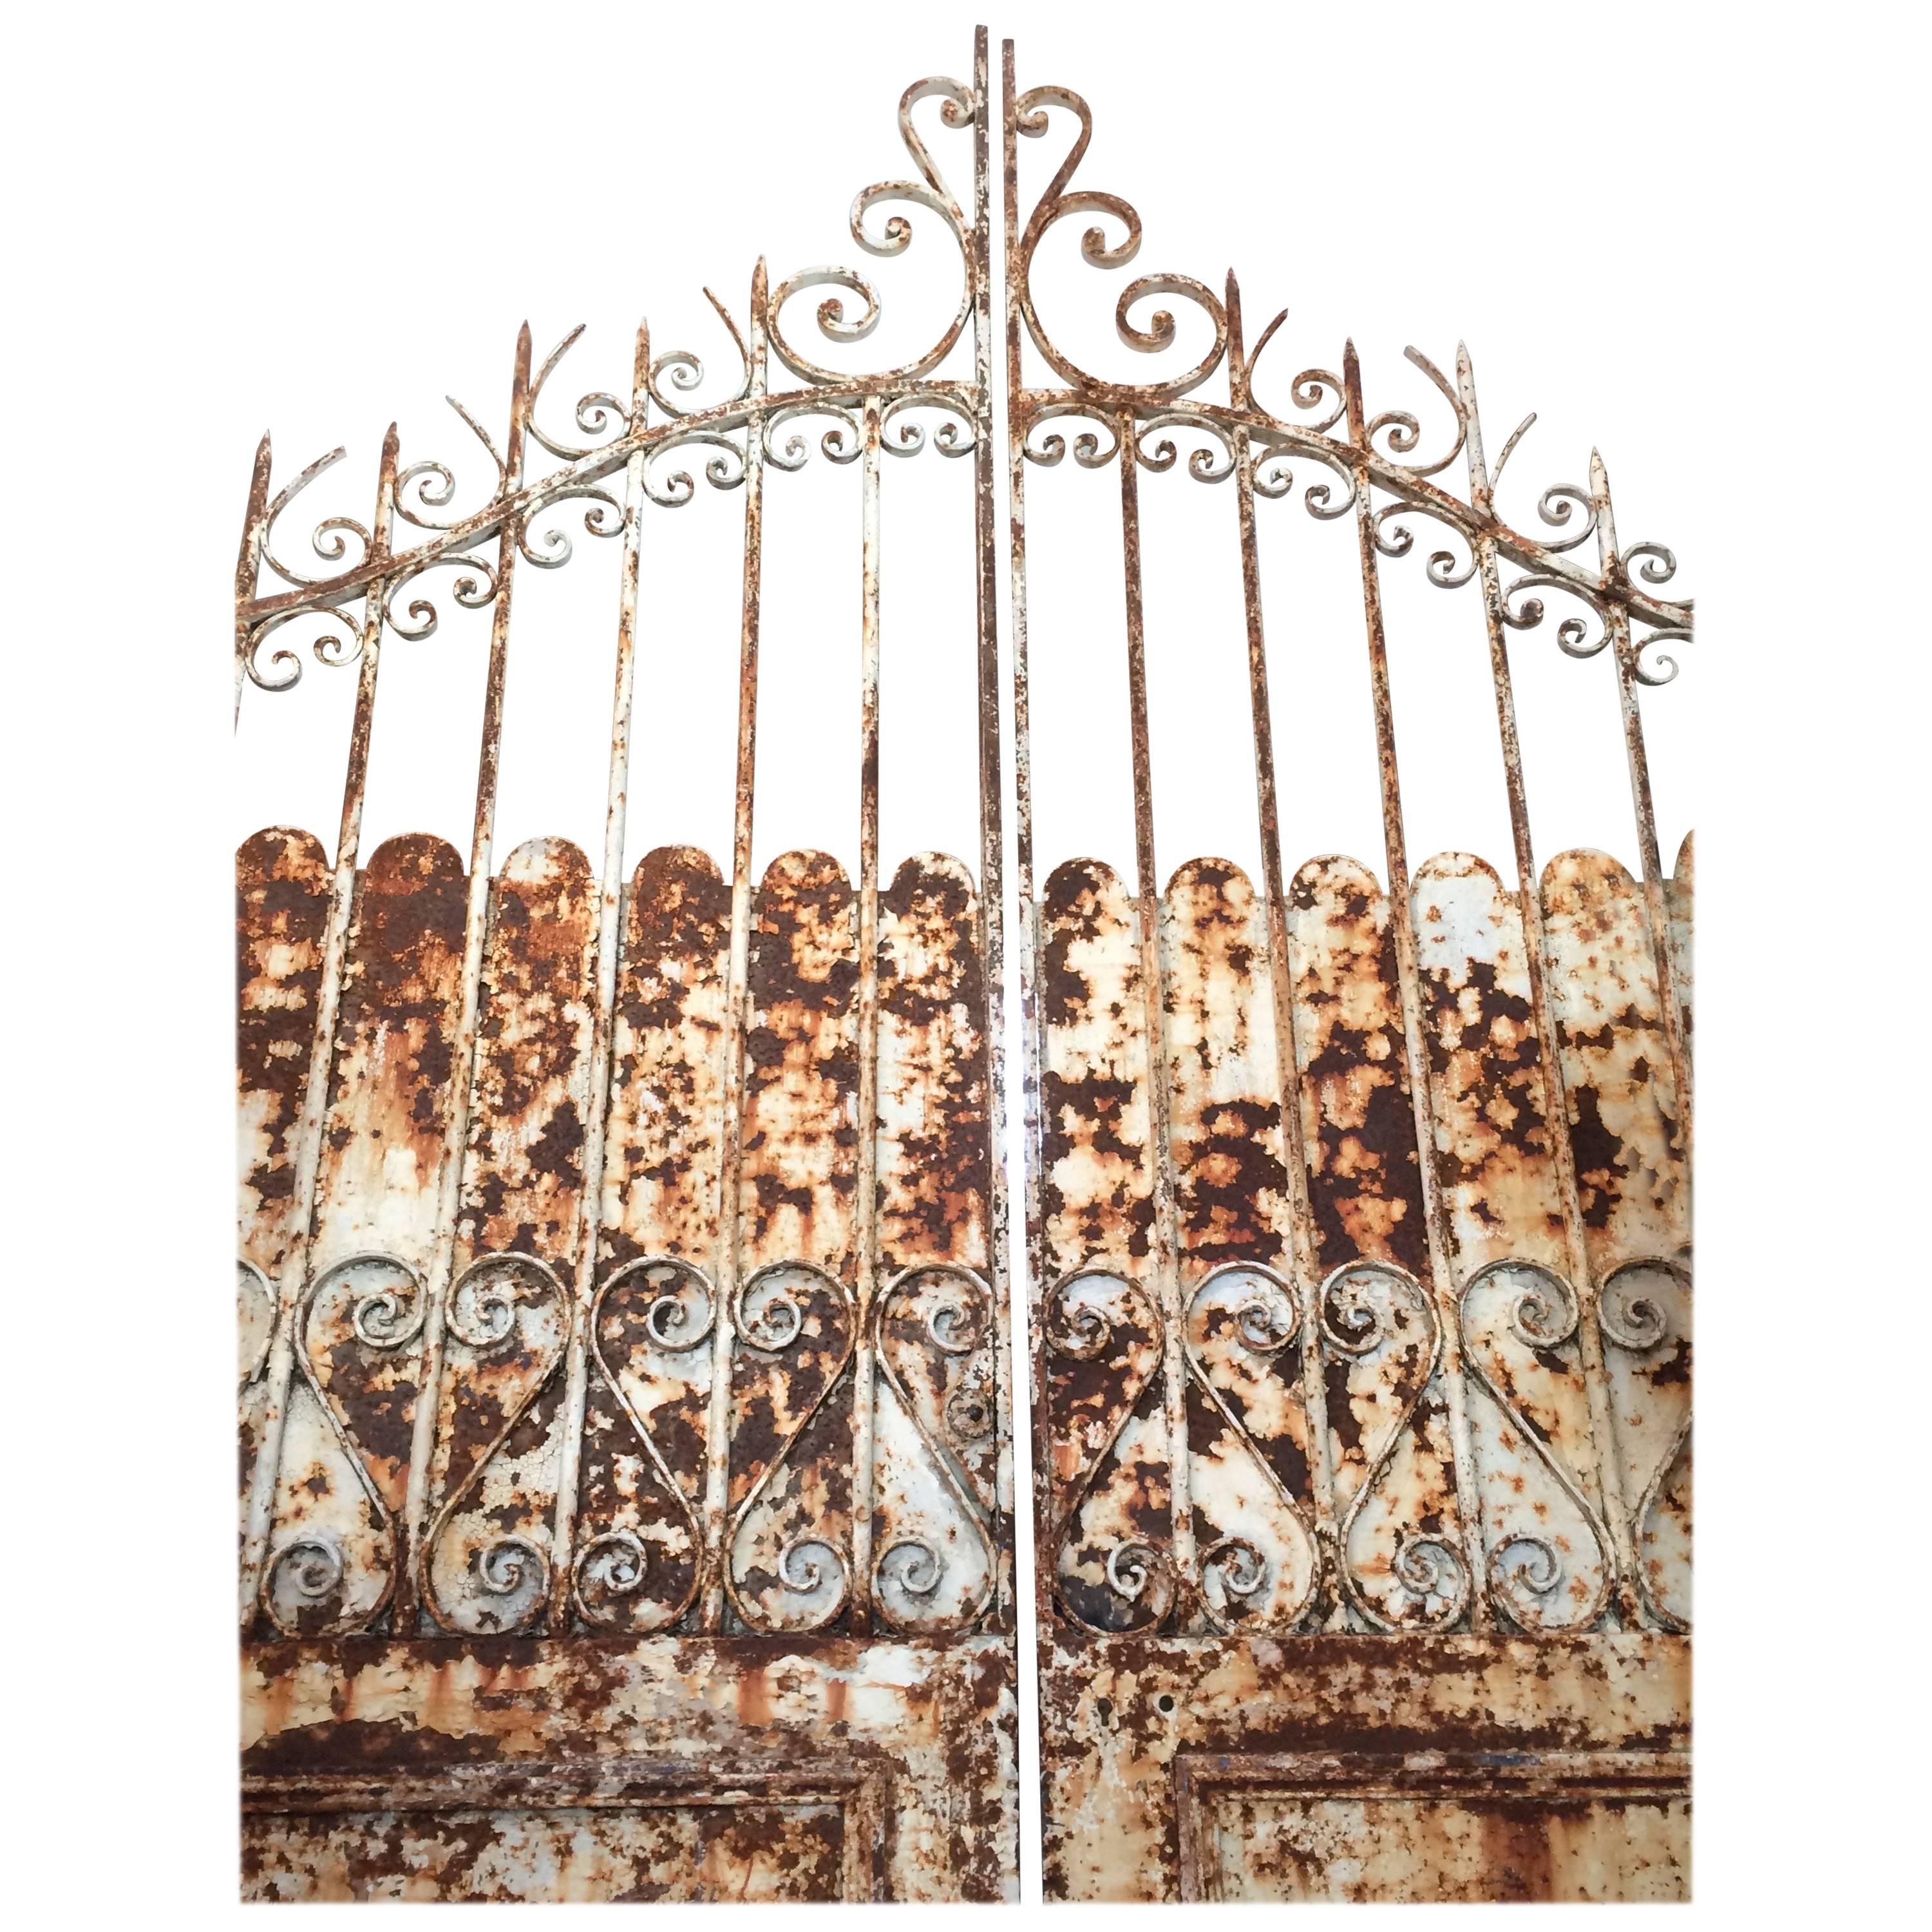 Monumental Pair of Distressed Iron Palace Garden Gates